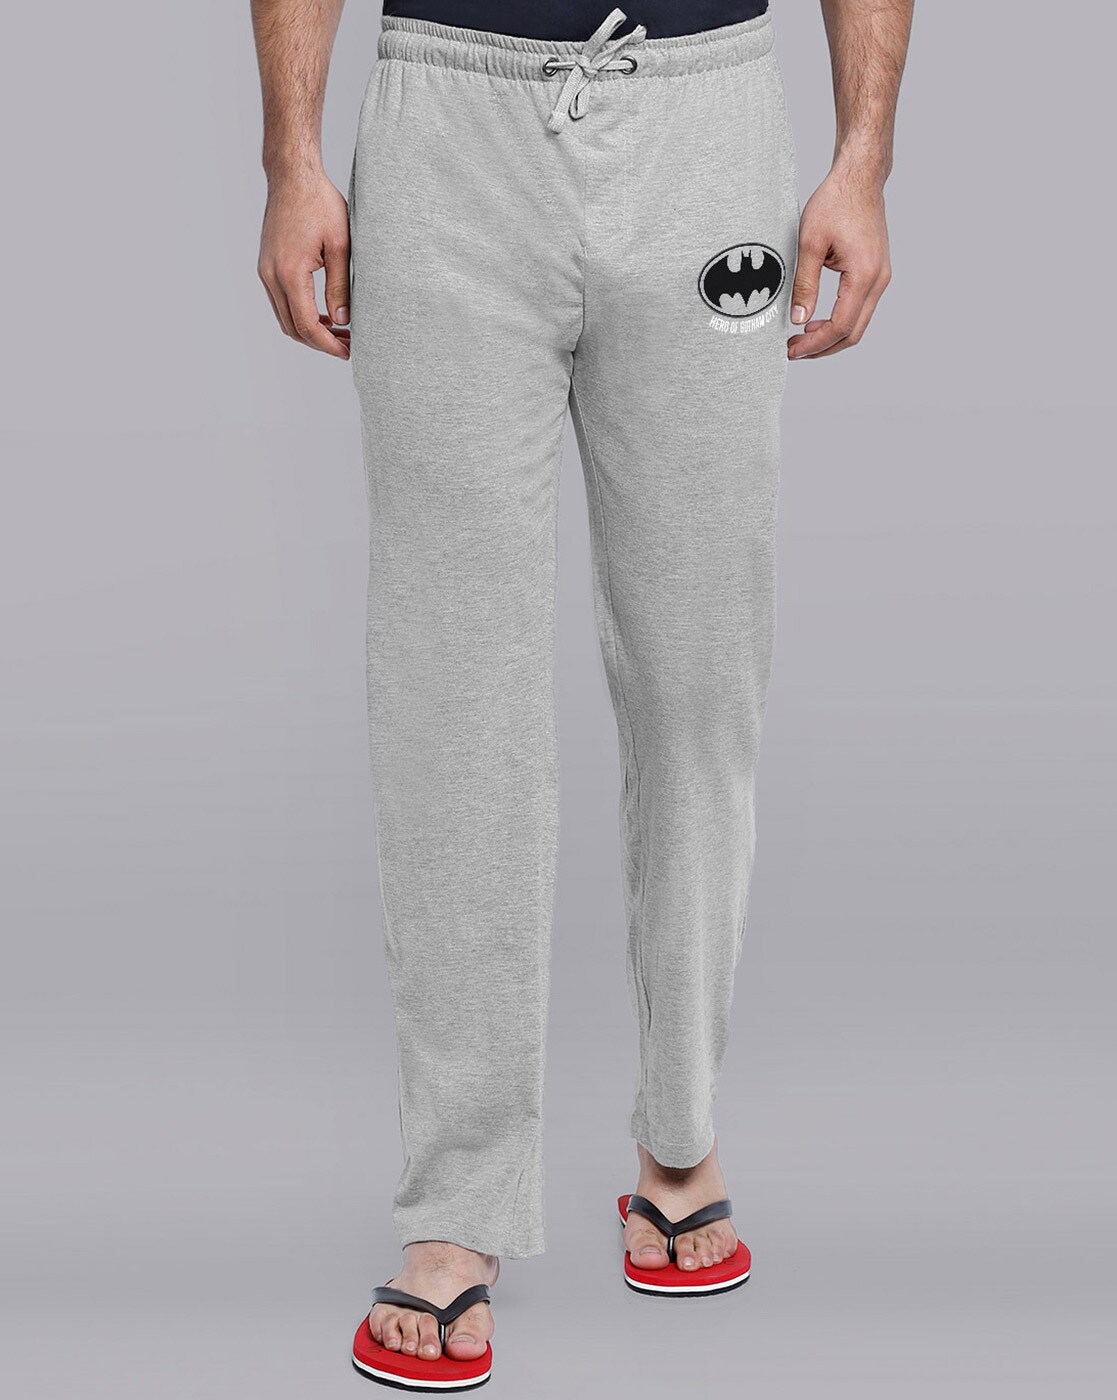 Dc Comics Mens Batman Classic Bat Logo Sleep Jogger Pajama Pants  xxxlarge Black  Target